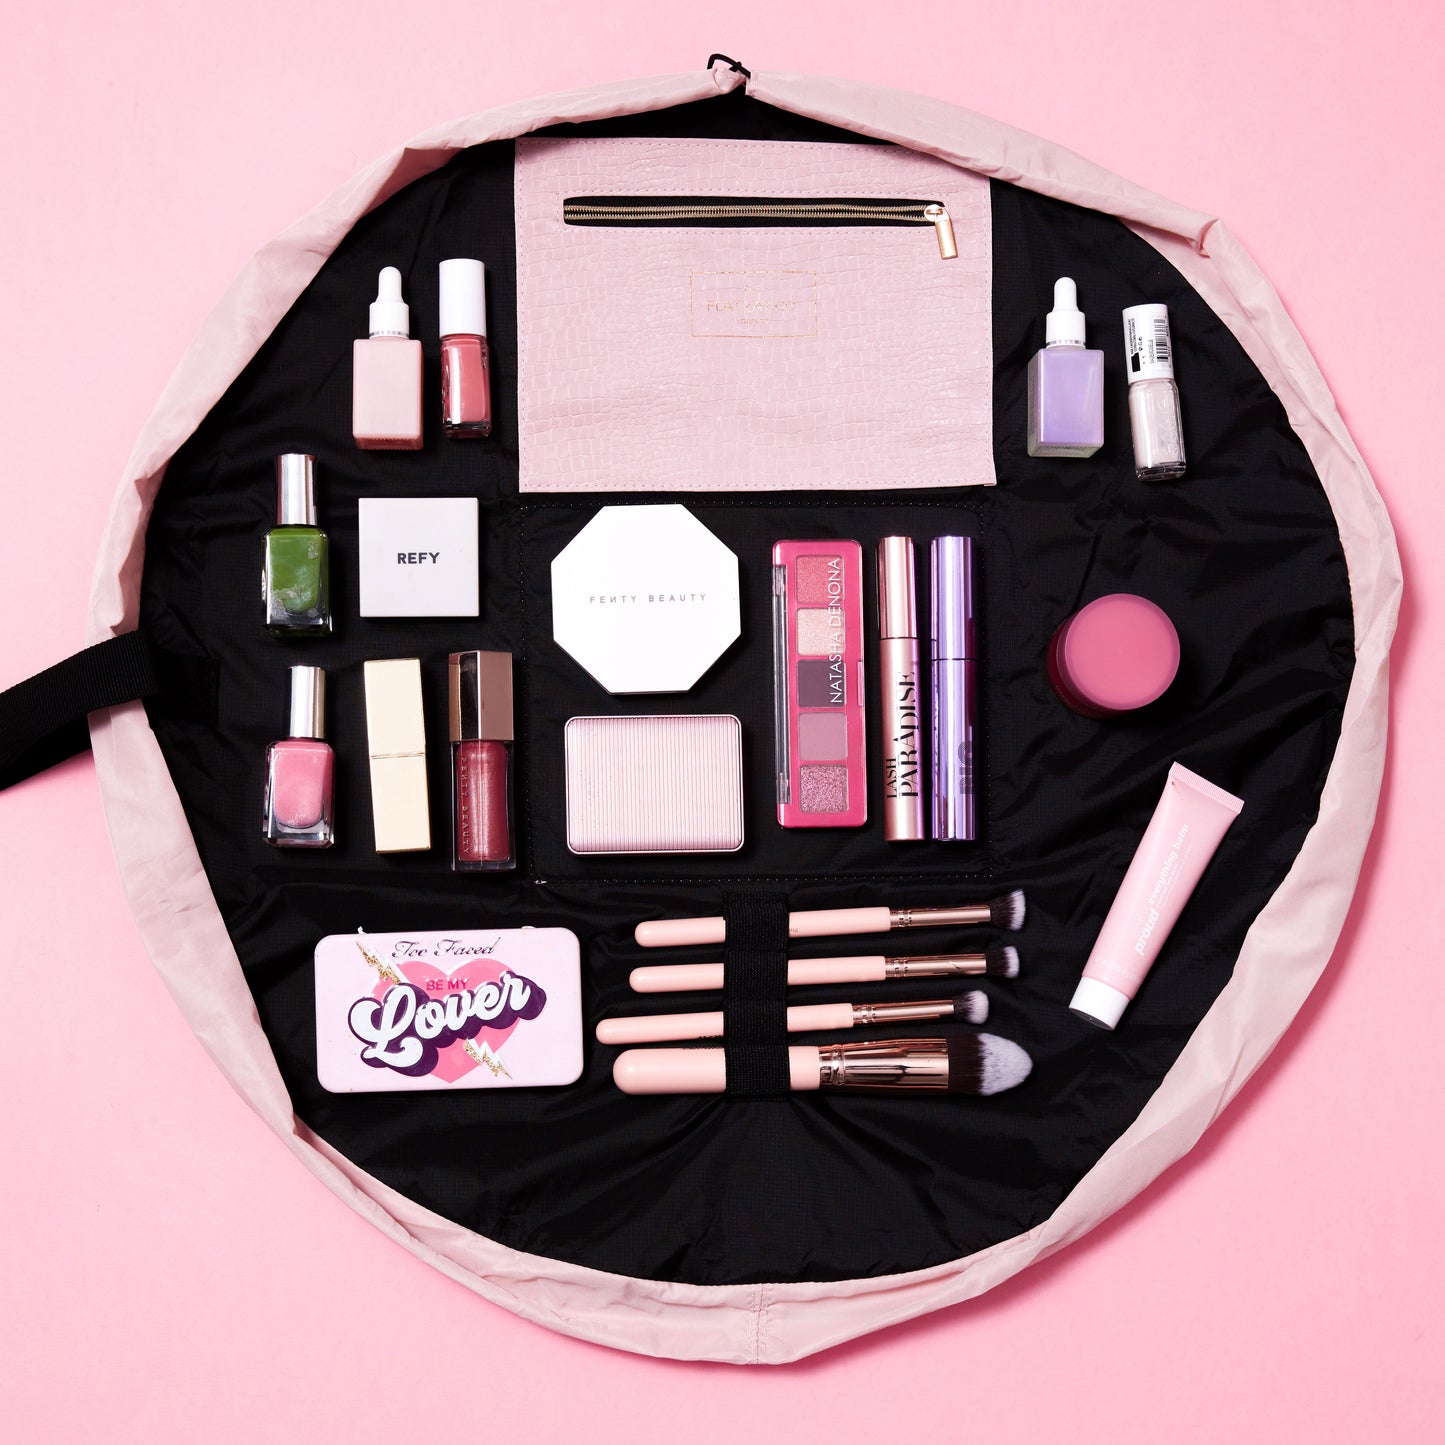 Pink Croc Full Size Flat Lay Makeup Bag